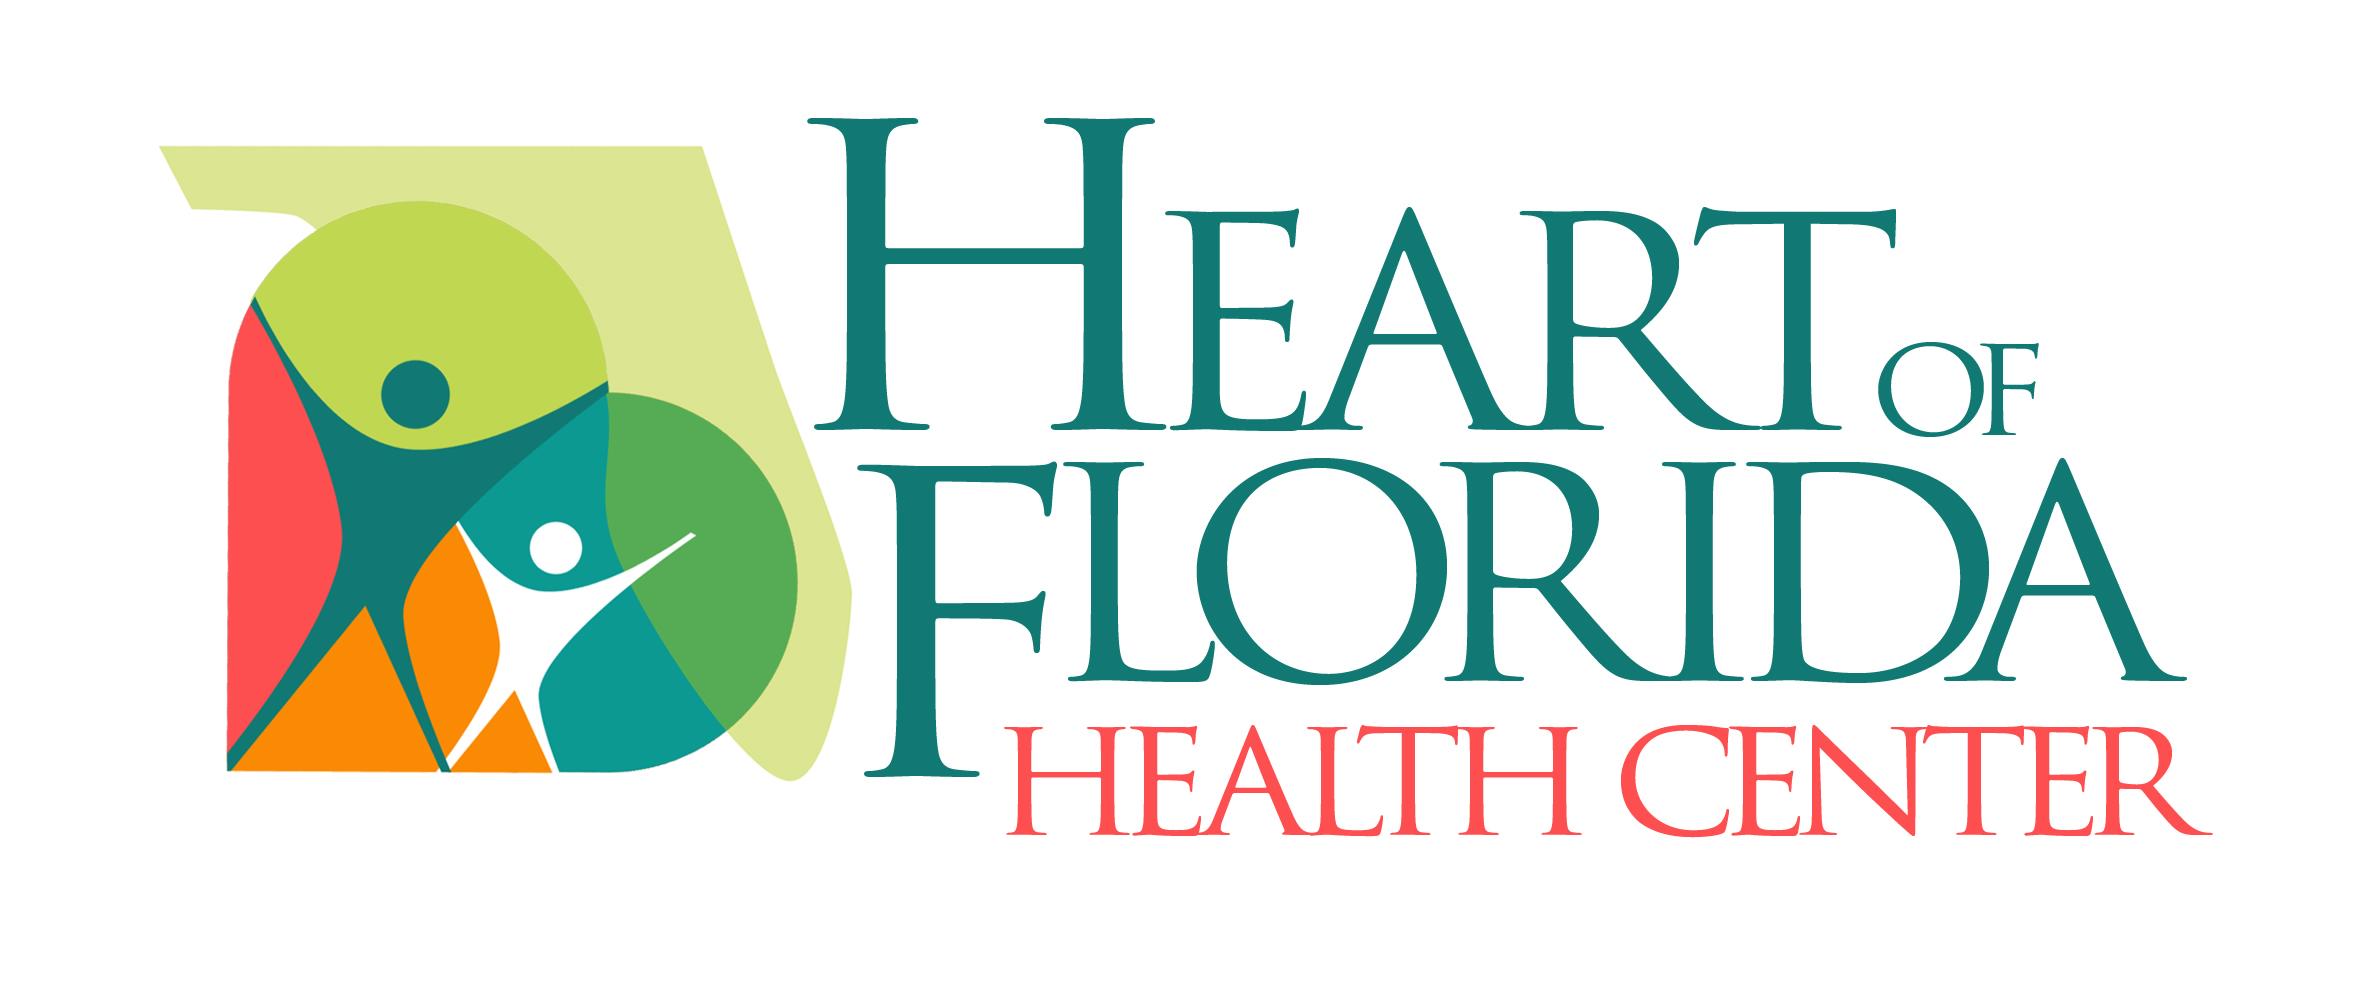 Heart of Florida Health Center - East